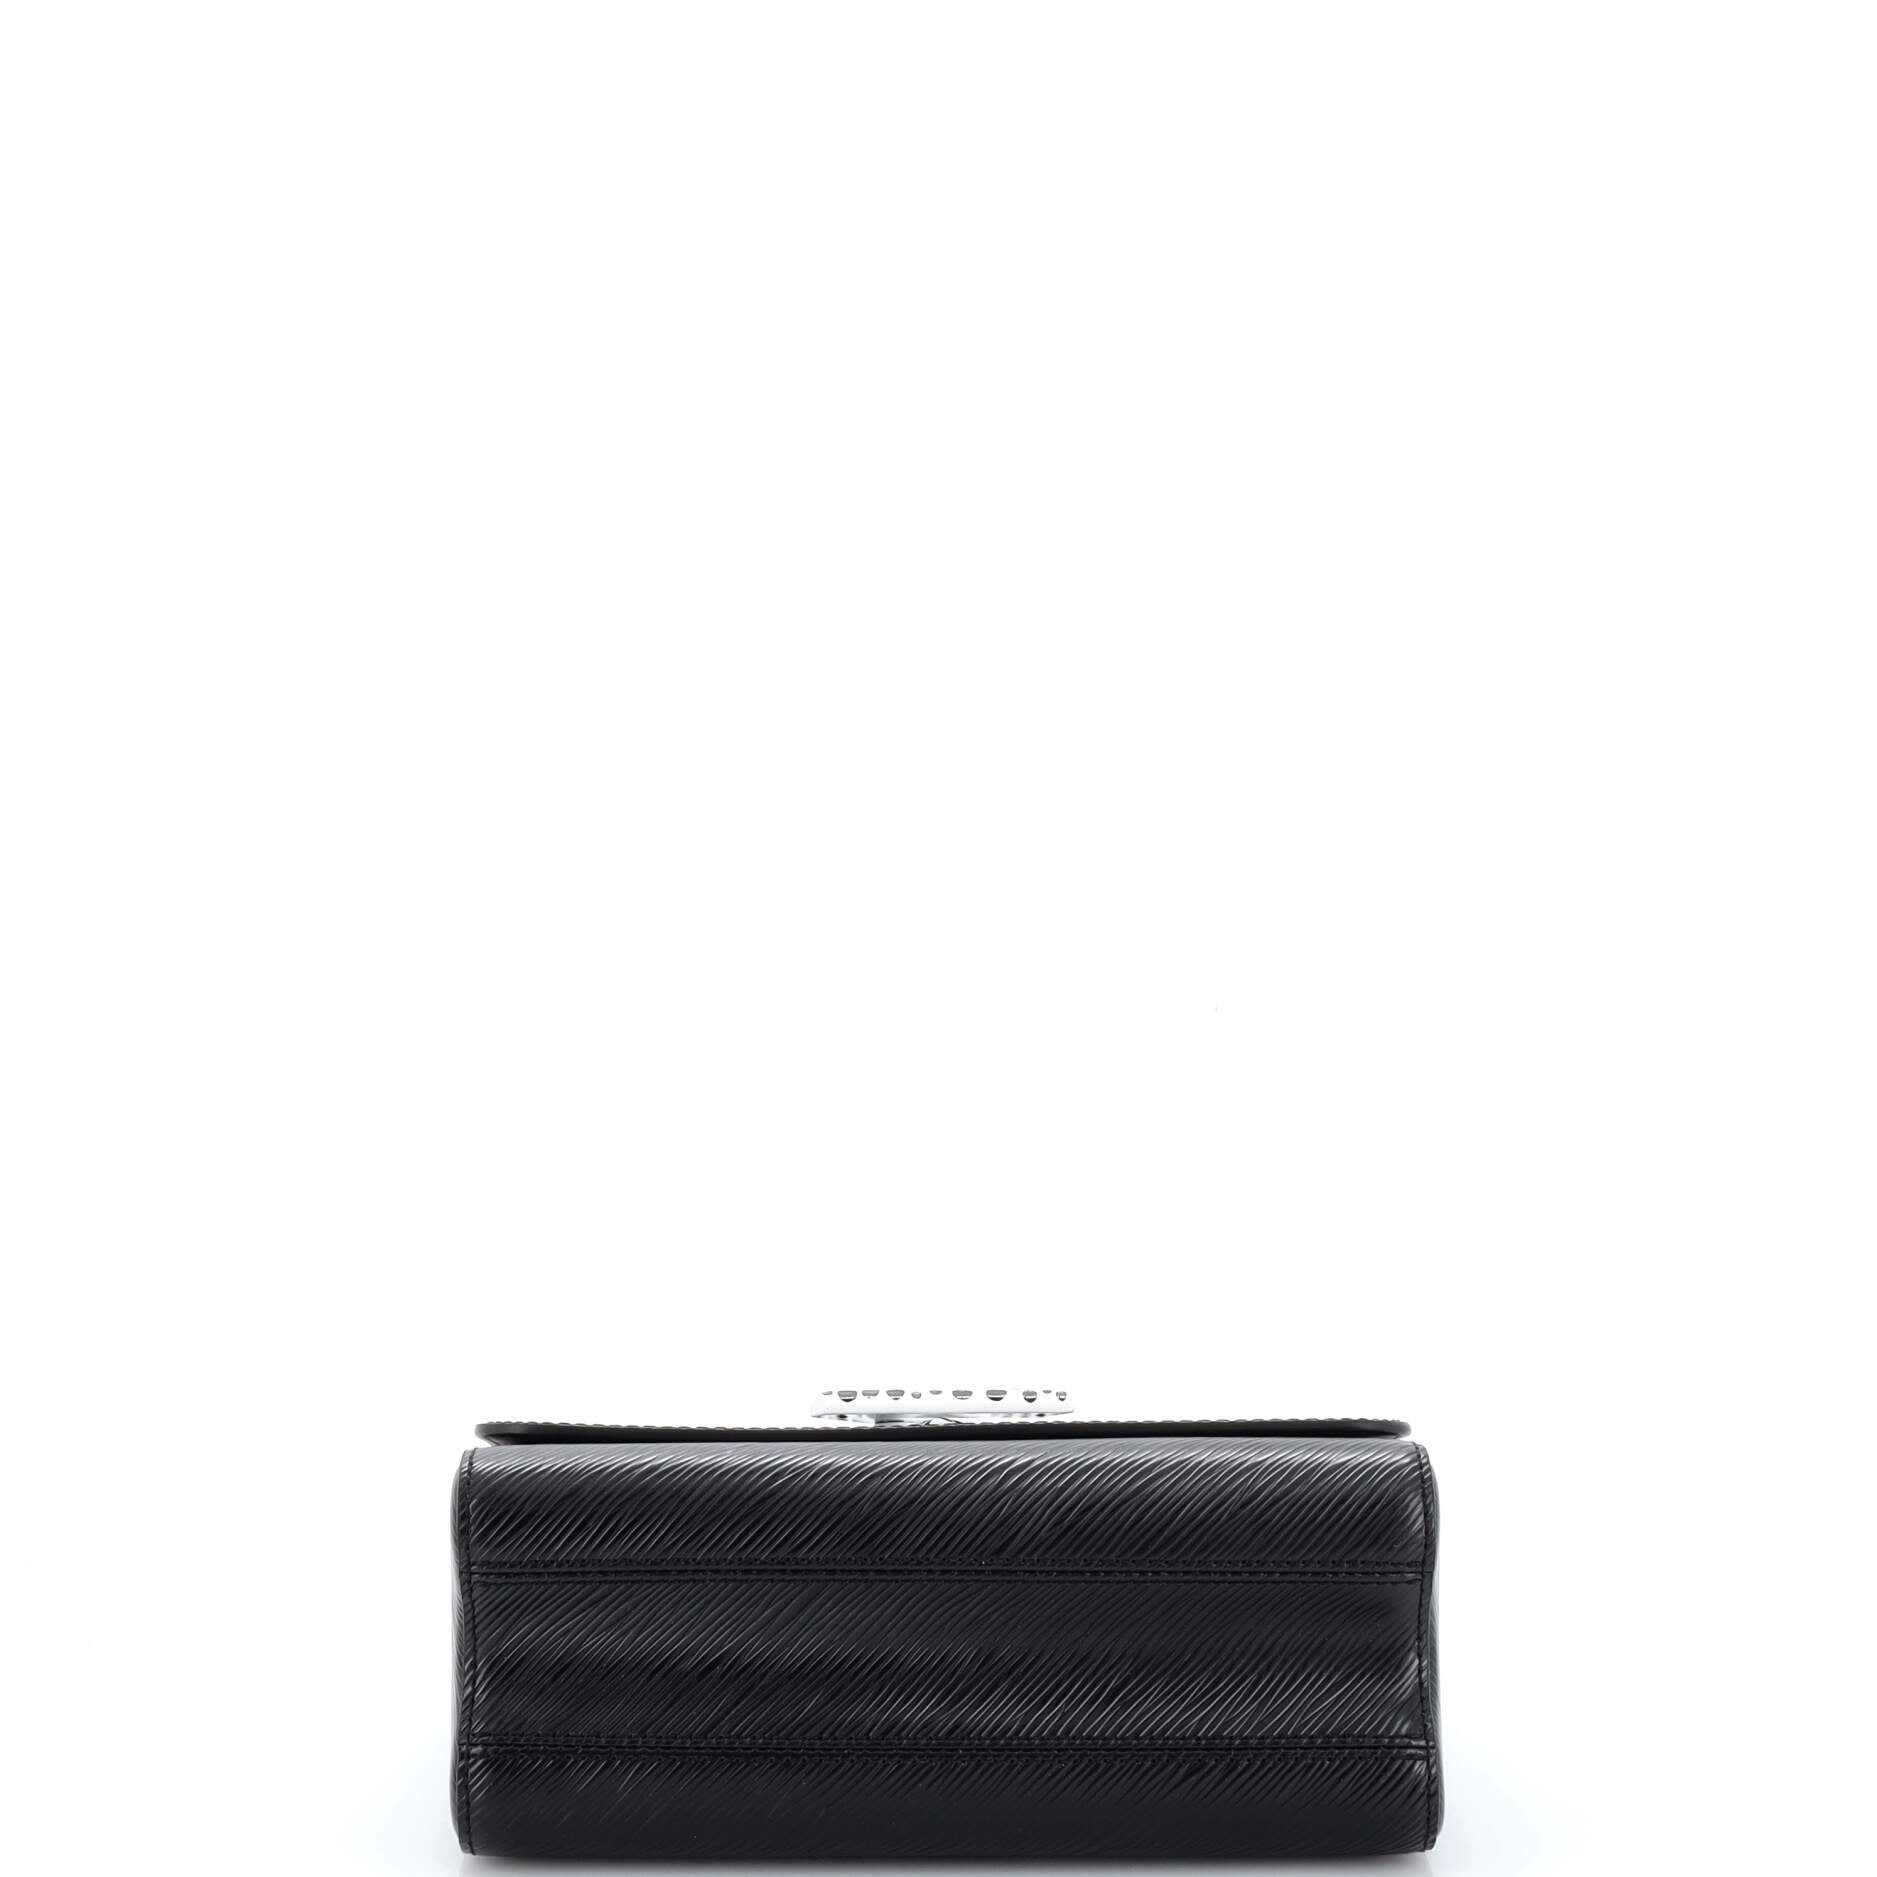 Louis Vuitton Twist Handbag Yayoi Kusama Infinity Dots Epi Leather